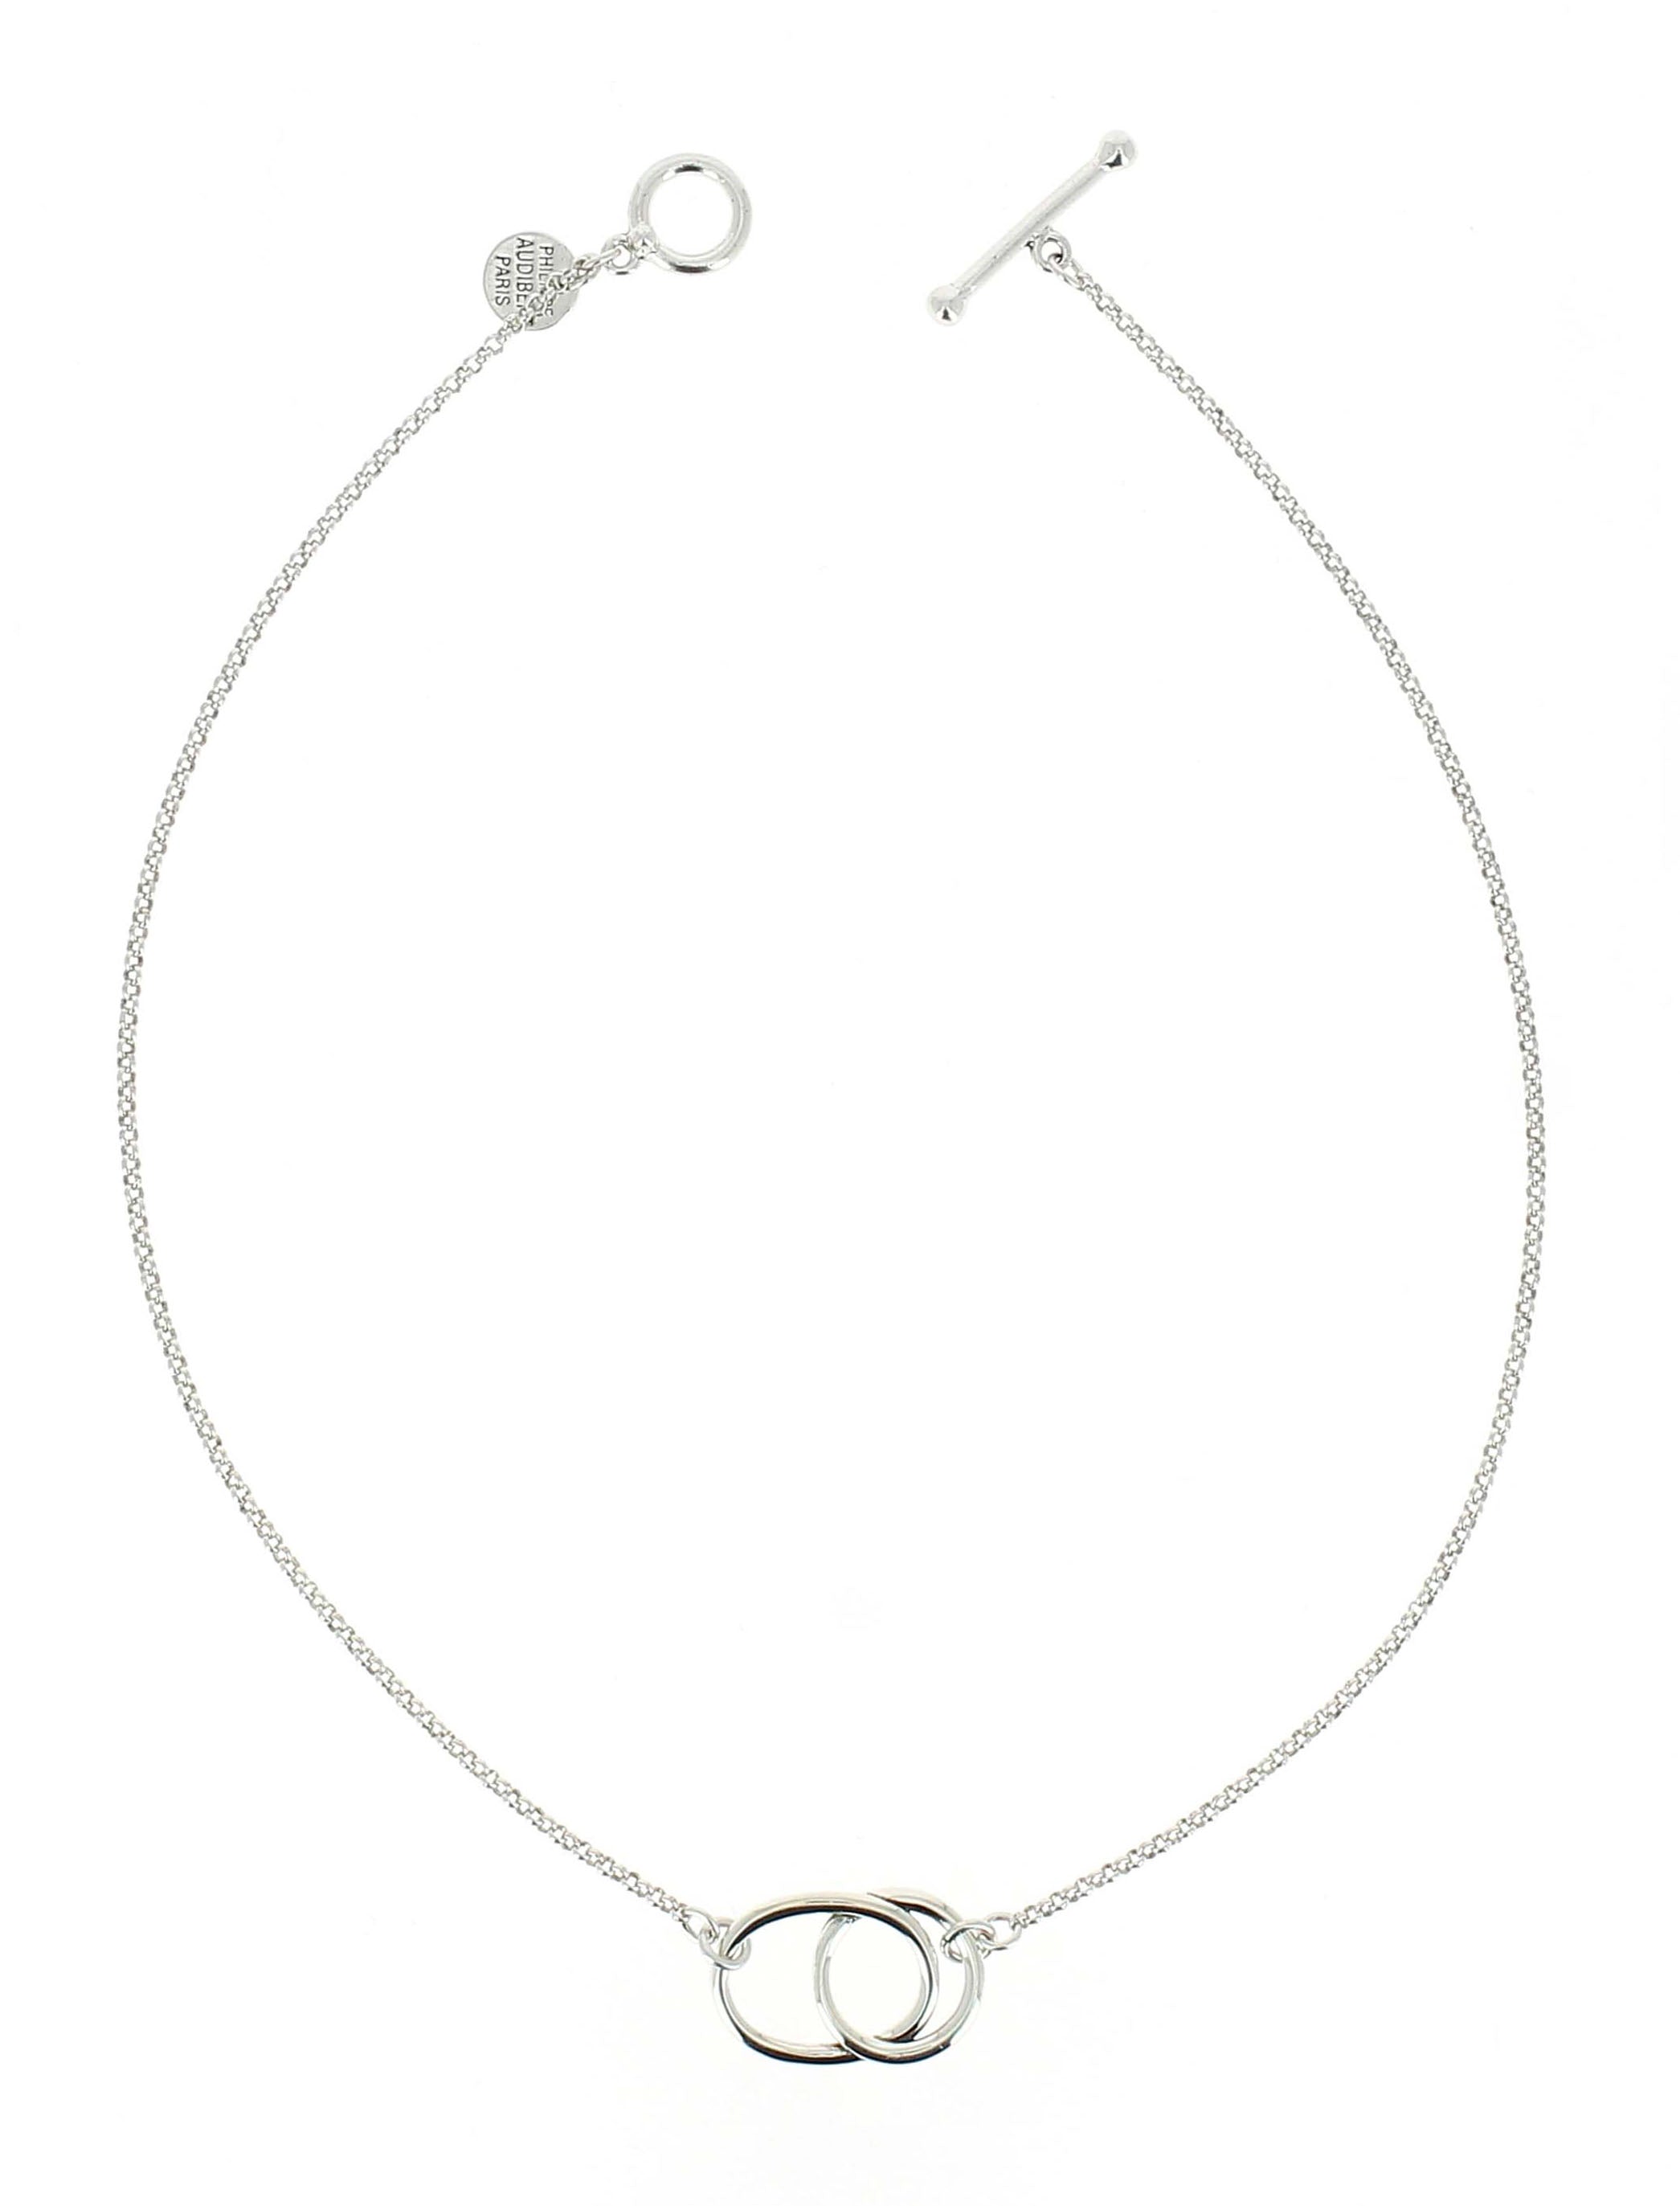 〔Philippe Audibert〕Orion necklace